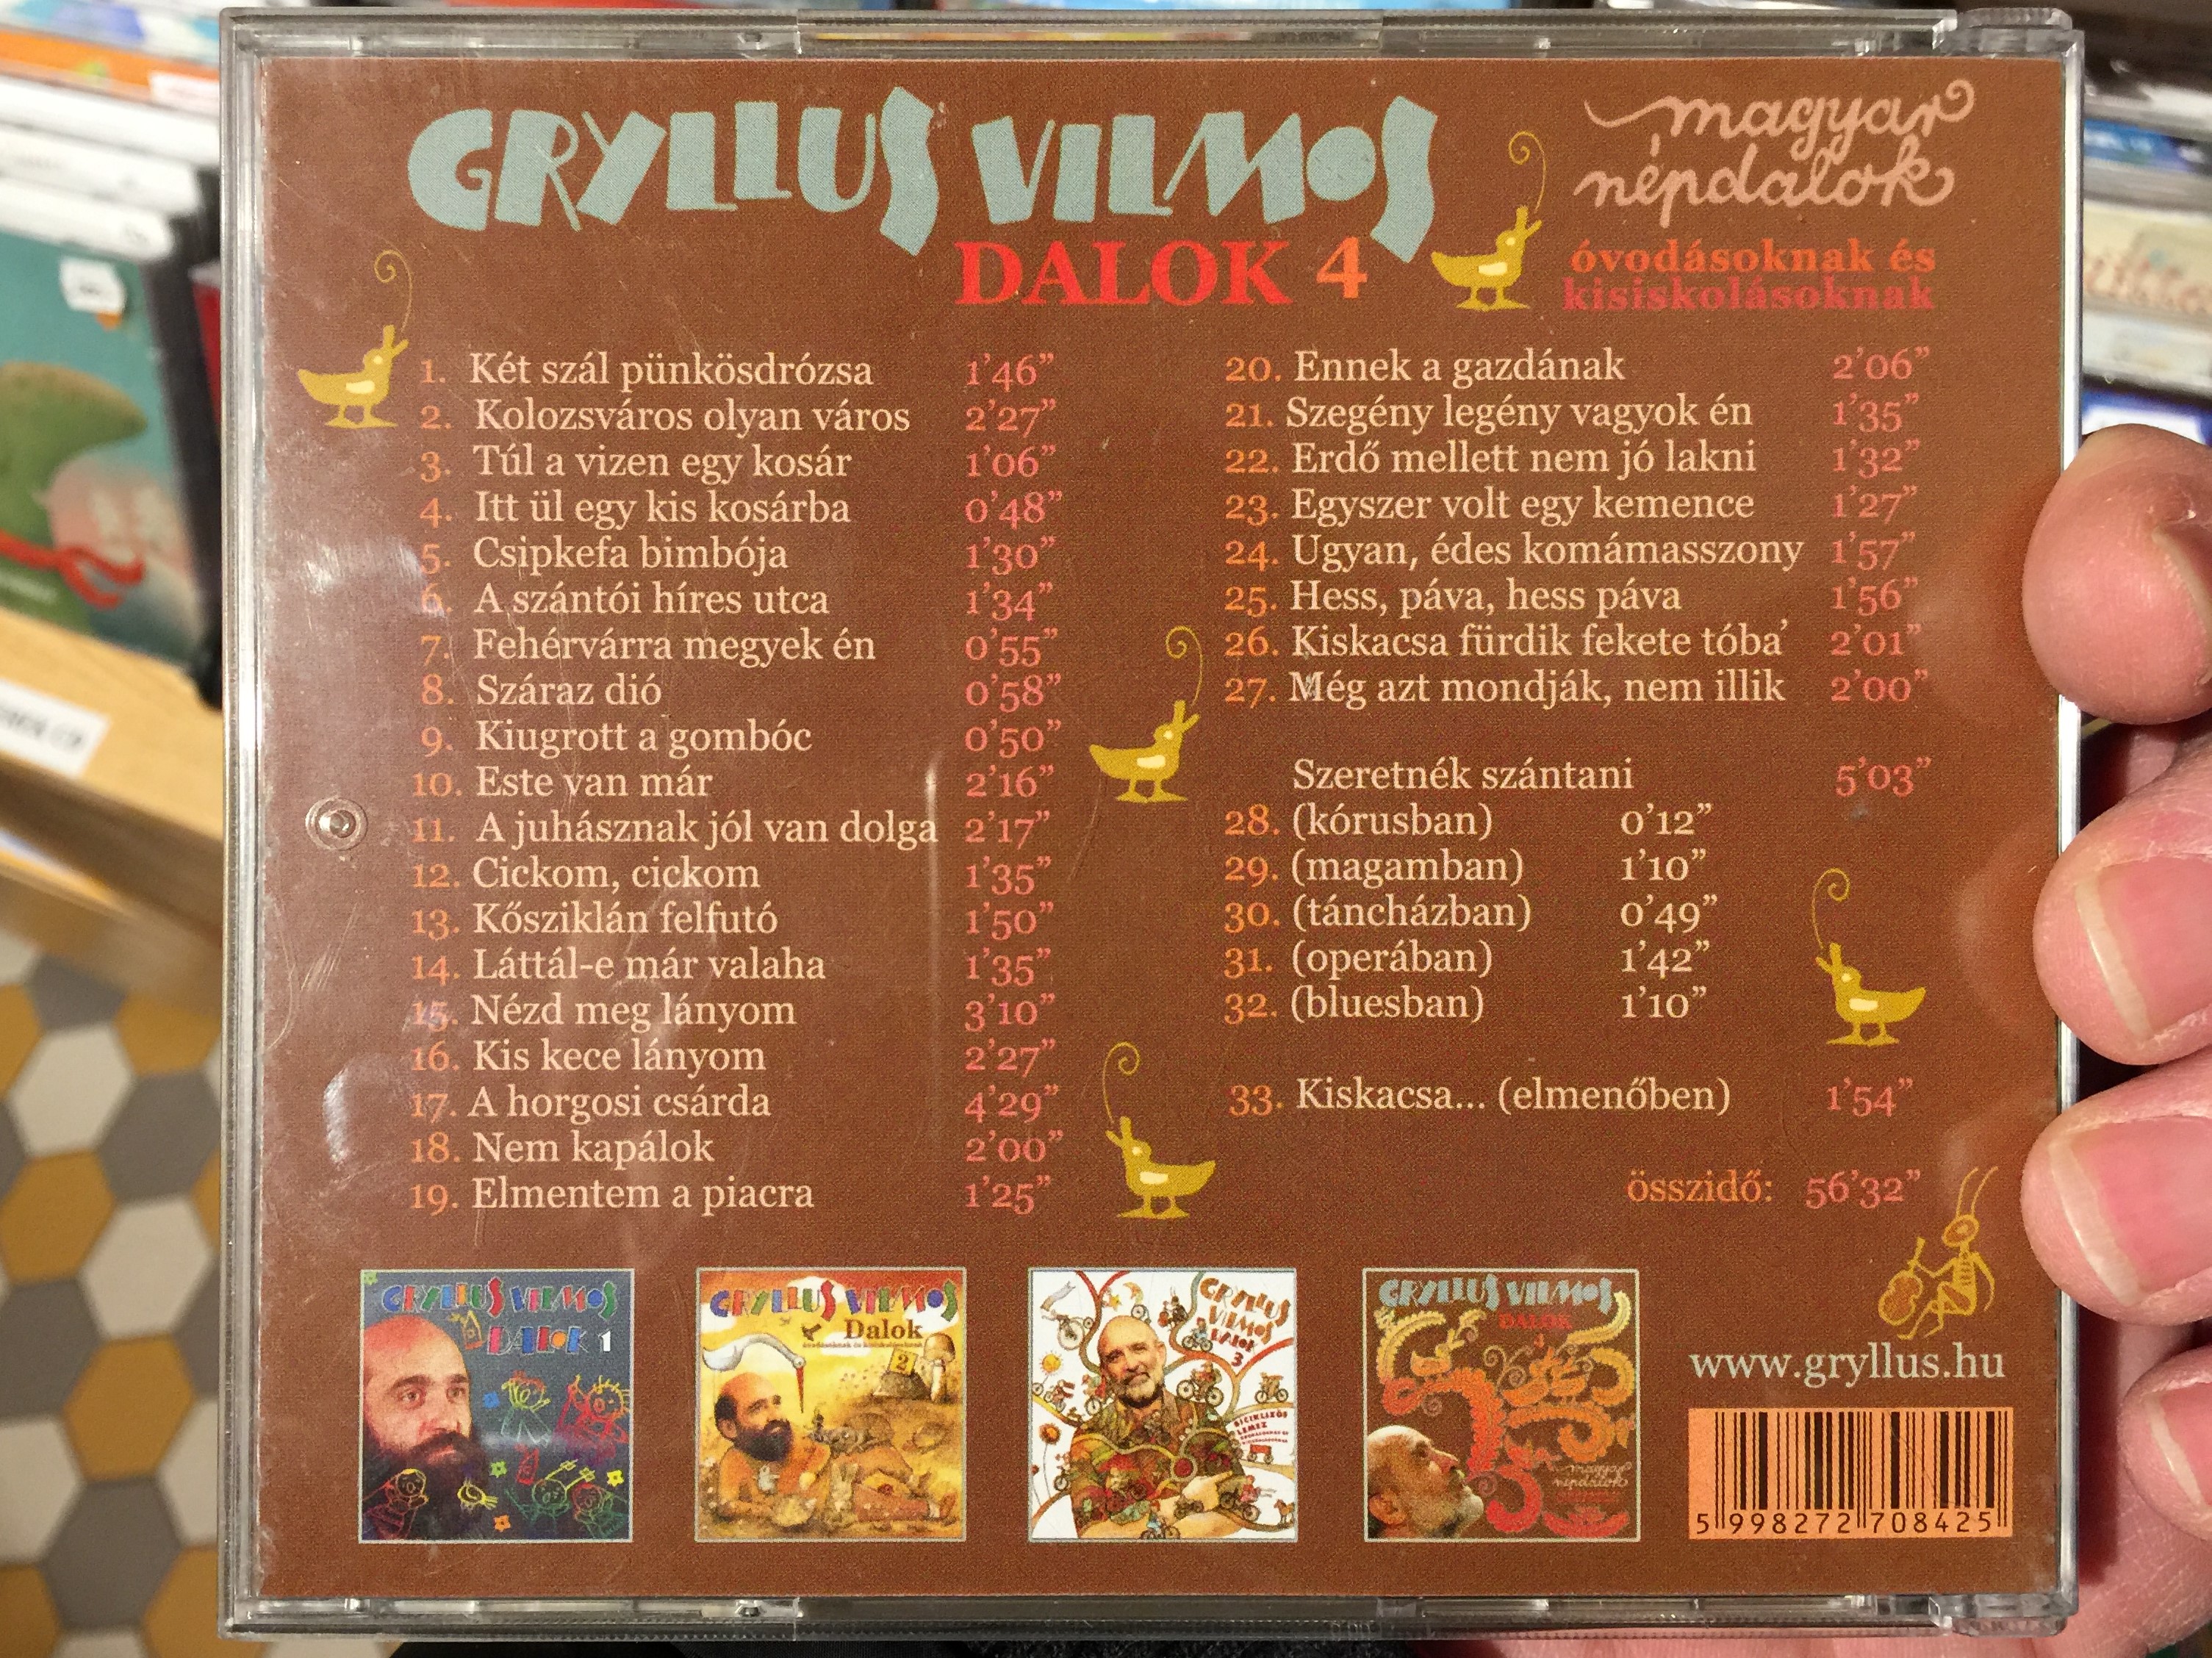 gryllus-vilmos-dalok-4.-magyar-n-pdalok-vod-soknak-s-kisiskol-soknak-treff-audio-cd-2009-trcd-010-2-.jpg